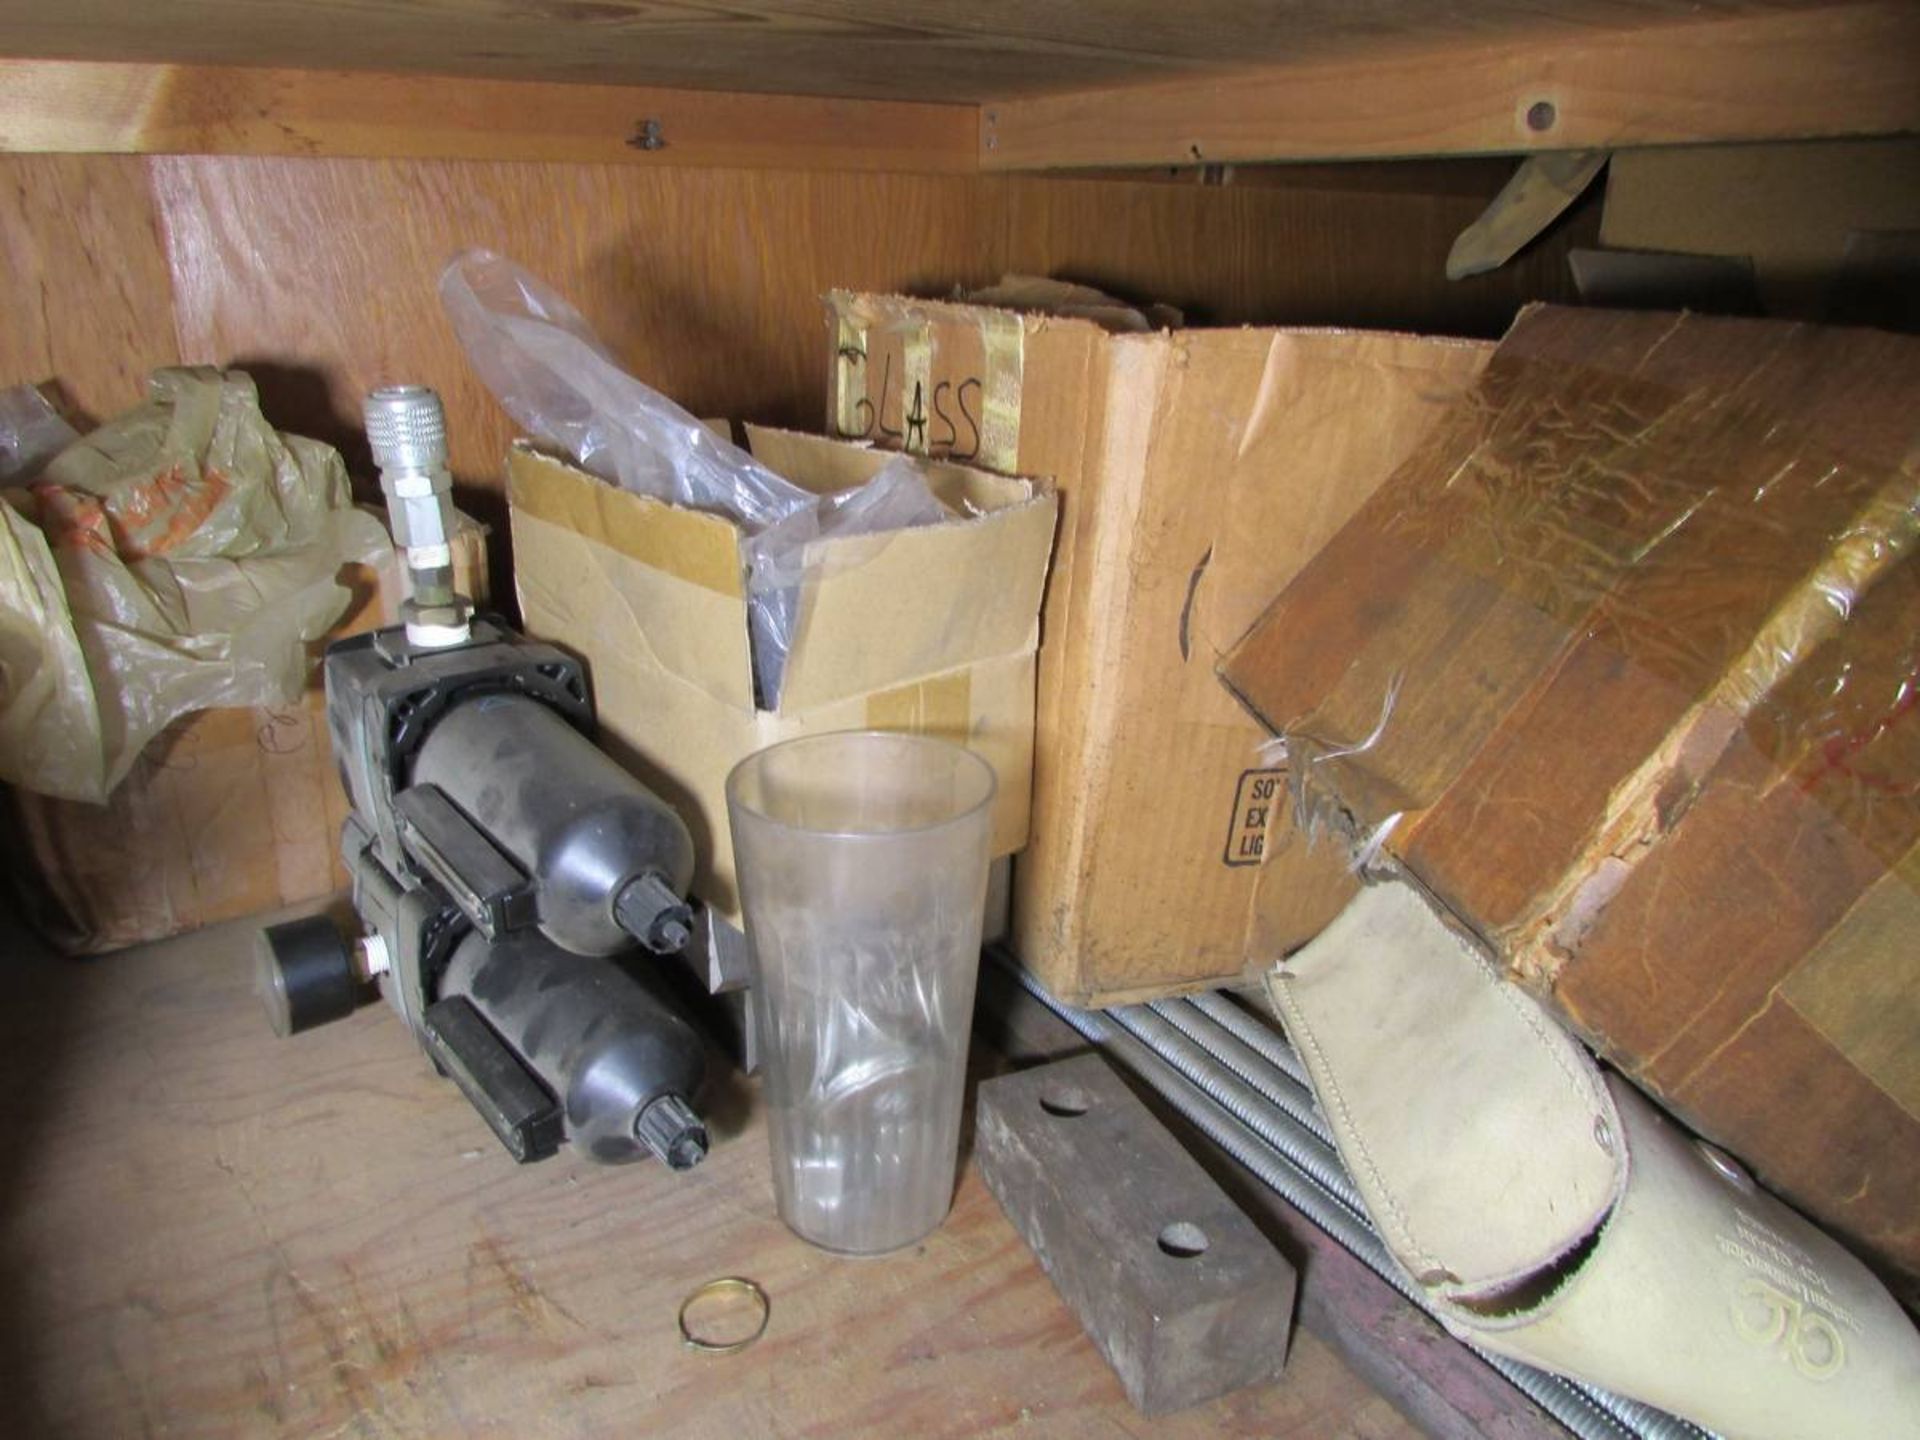 Contents of Building Maintenance Storage Closet - Image 11 of 19